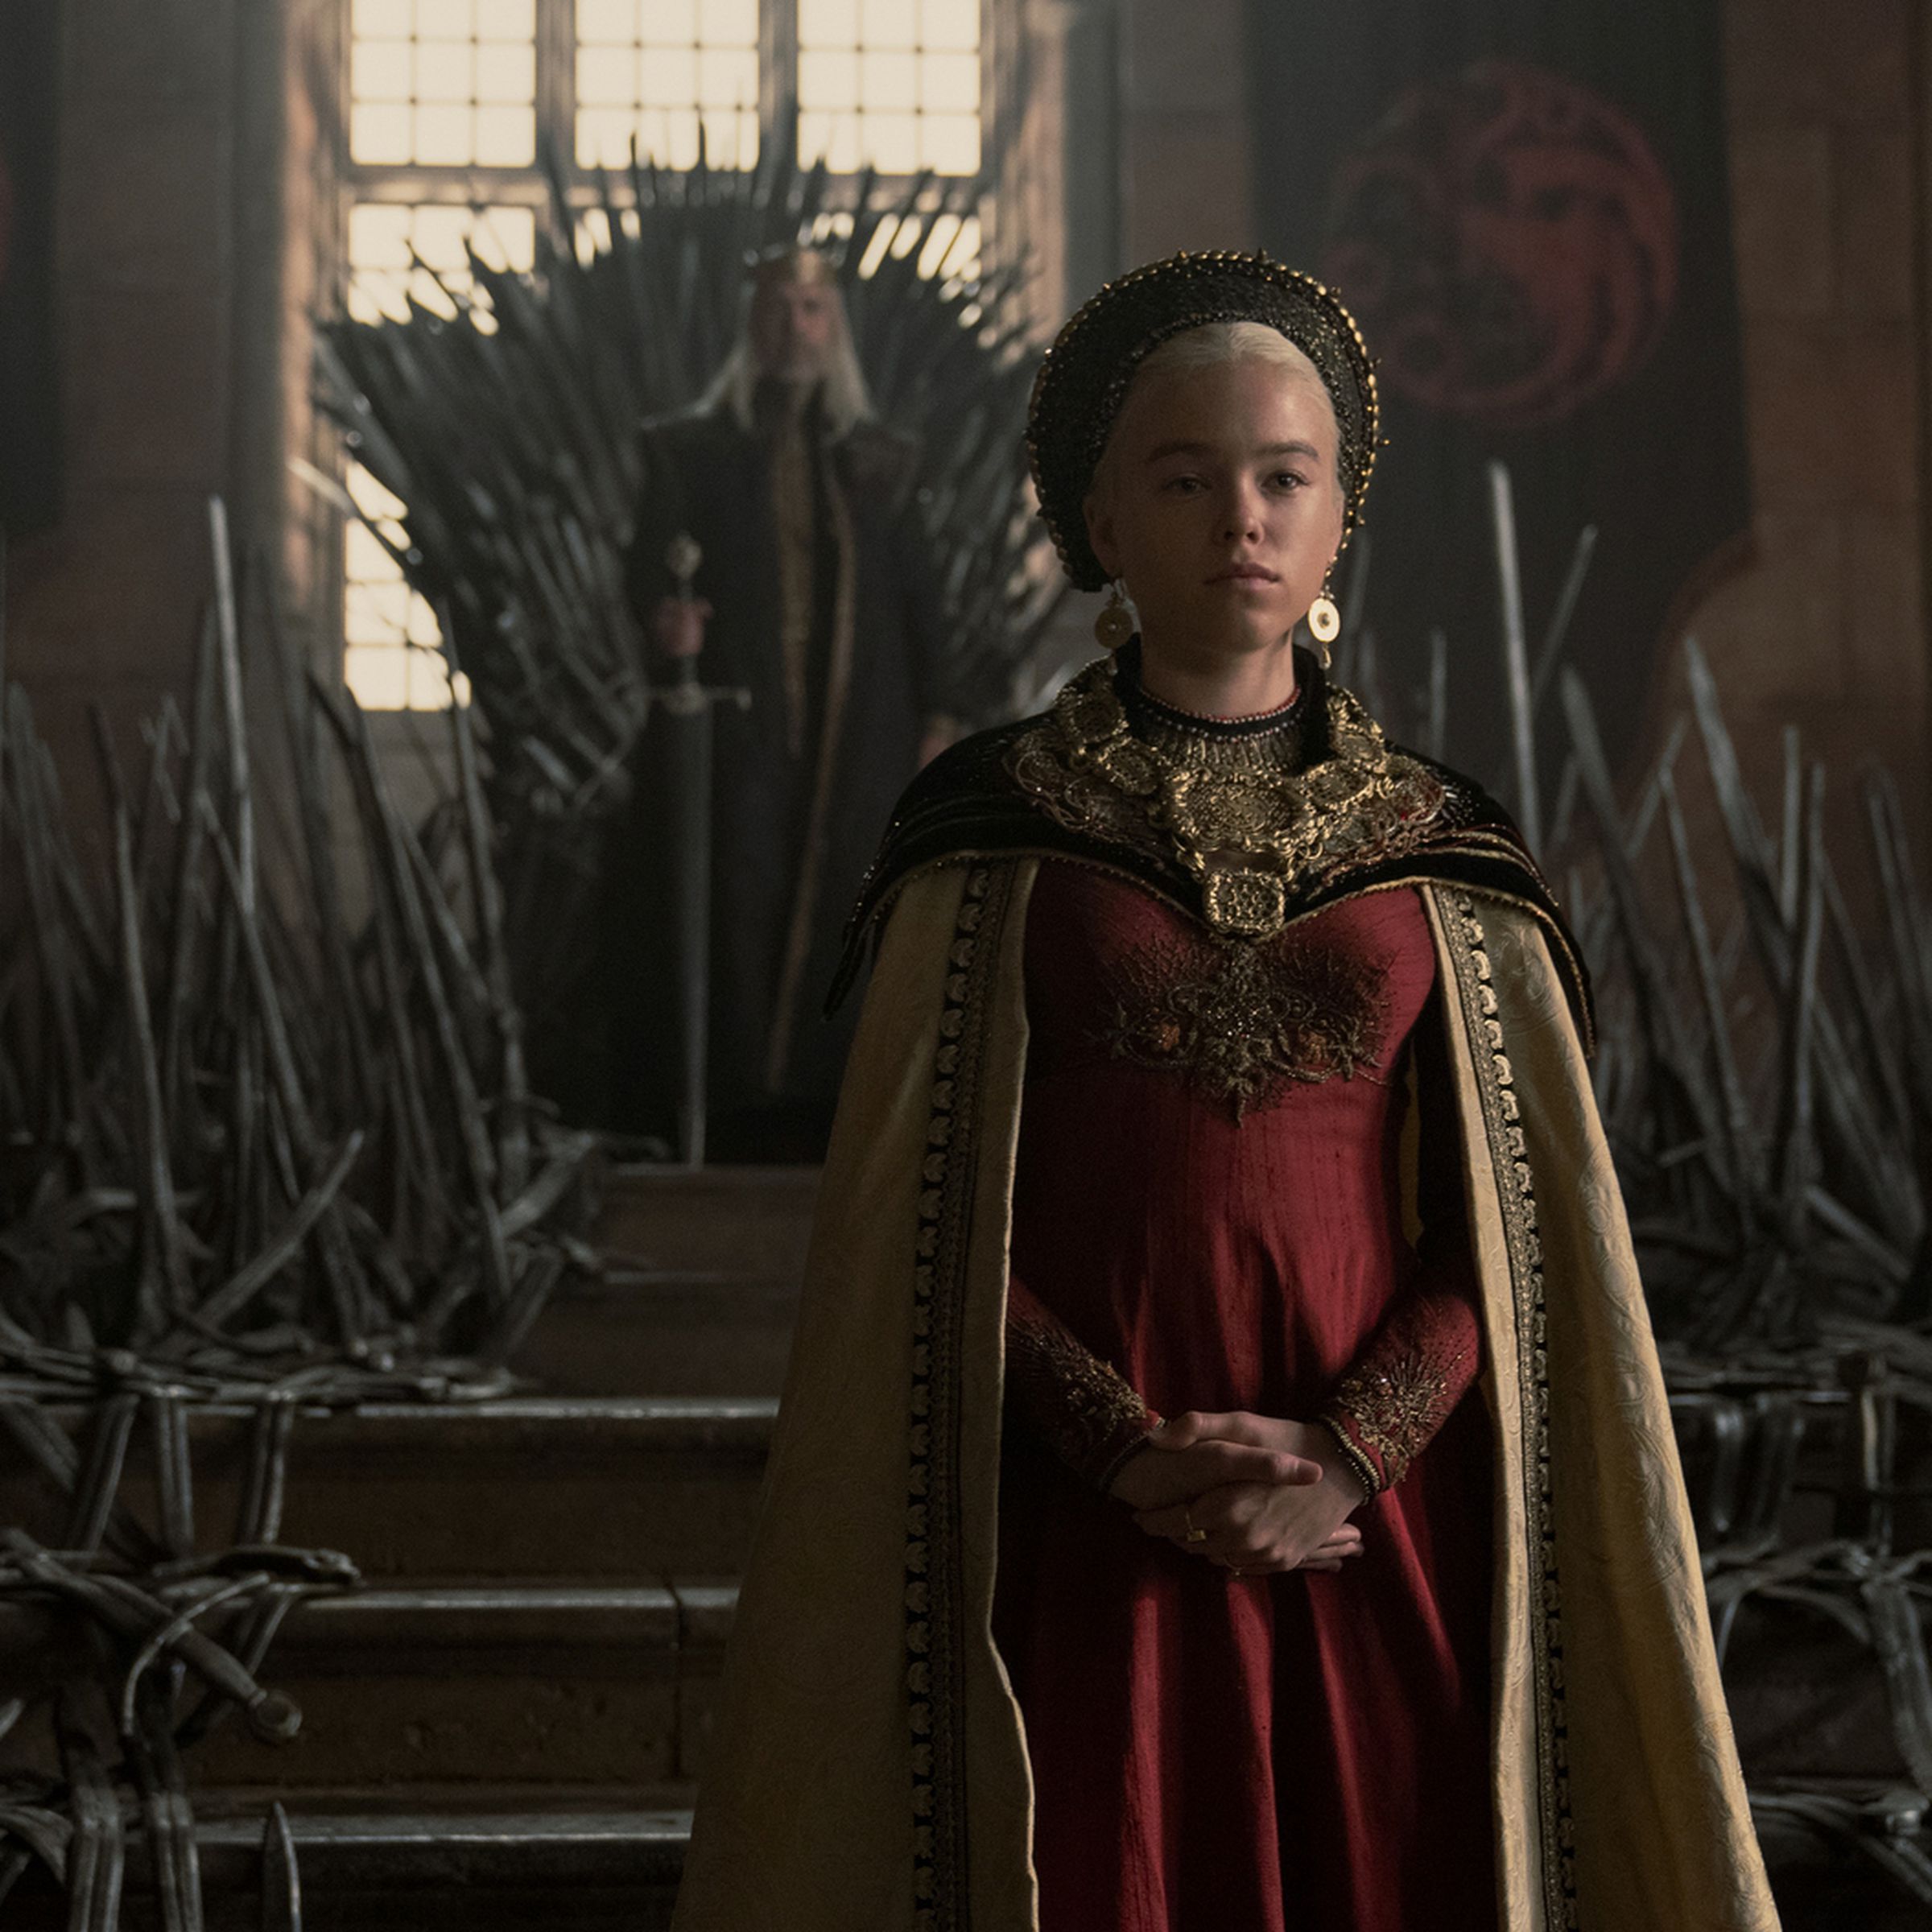 Milly Alcock as Princess Rhaenyra Targaryen, Paddy Considine as King Viserys I Targaryen